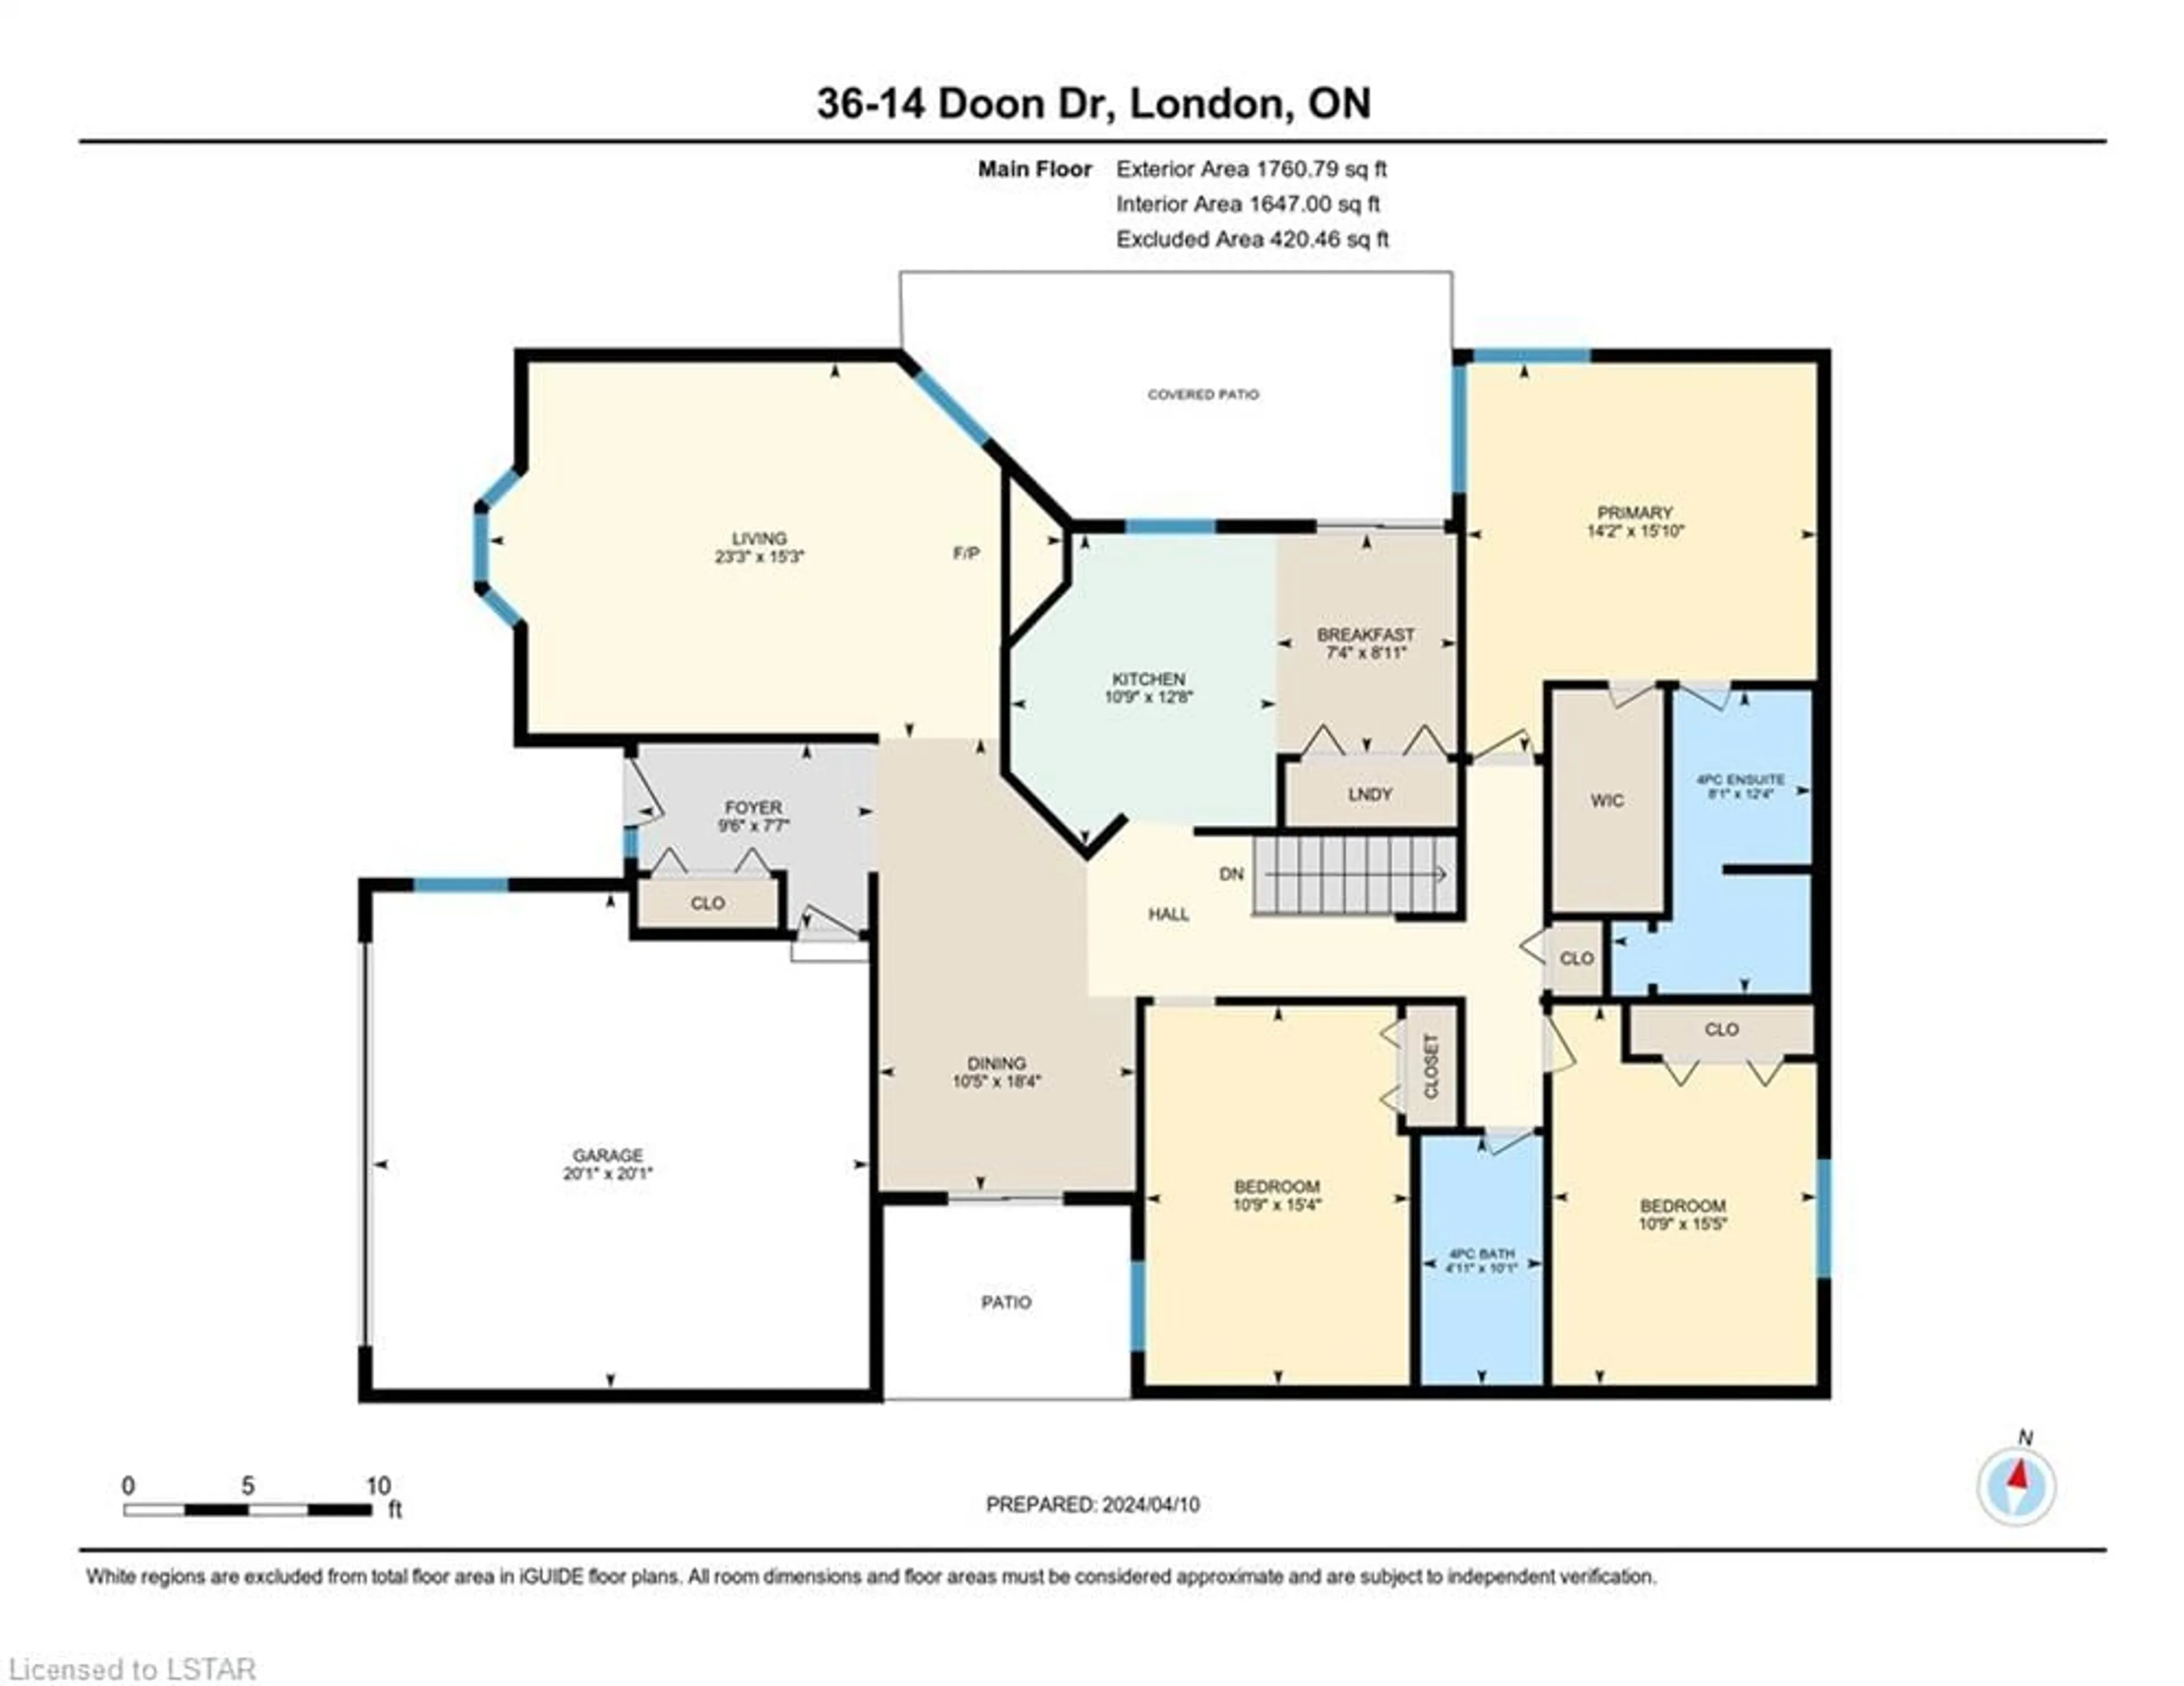 Floor plan for 14 Doon Dr #36, London Ontario N5X 3P1